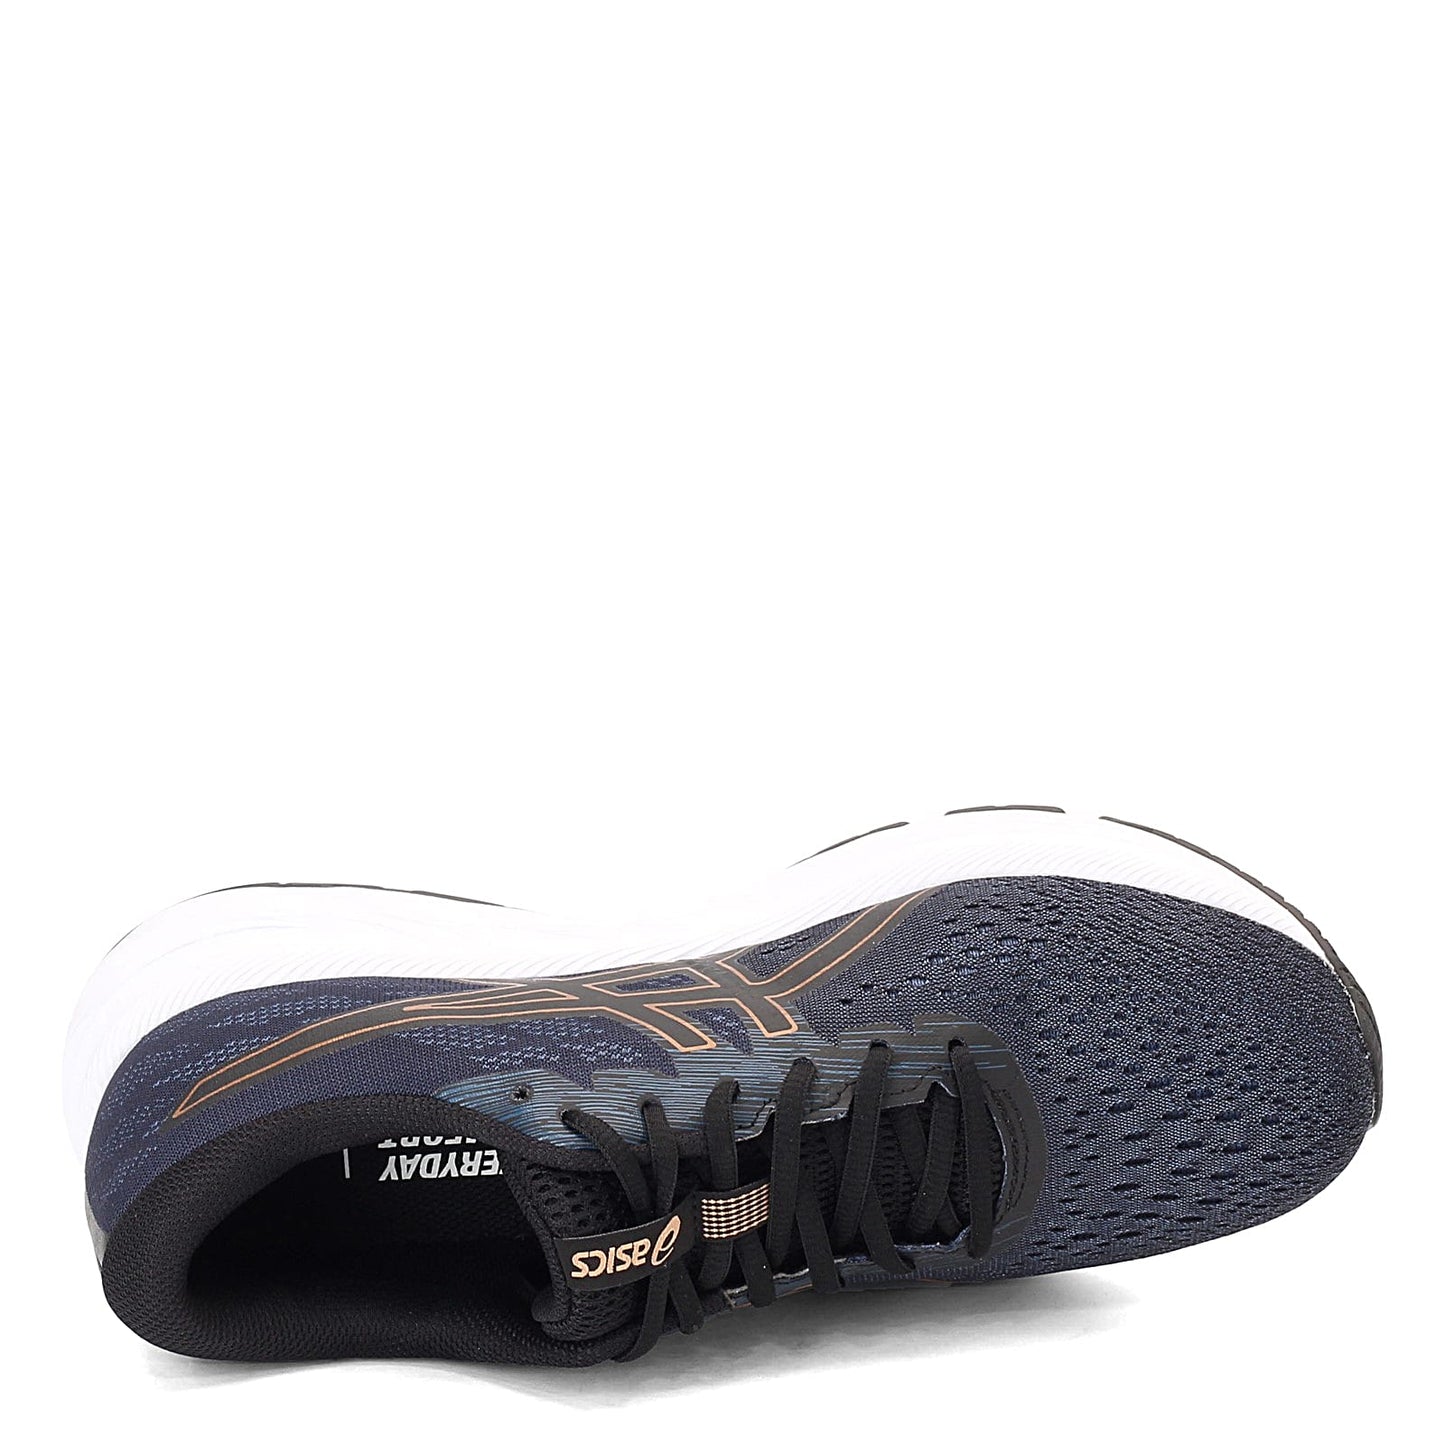 Peltz Shoes  Men's ASICS GEL-Excite 7 Running Shoe